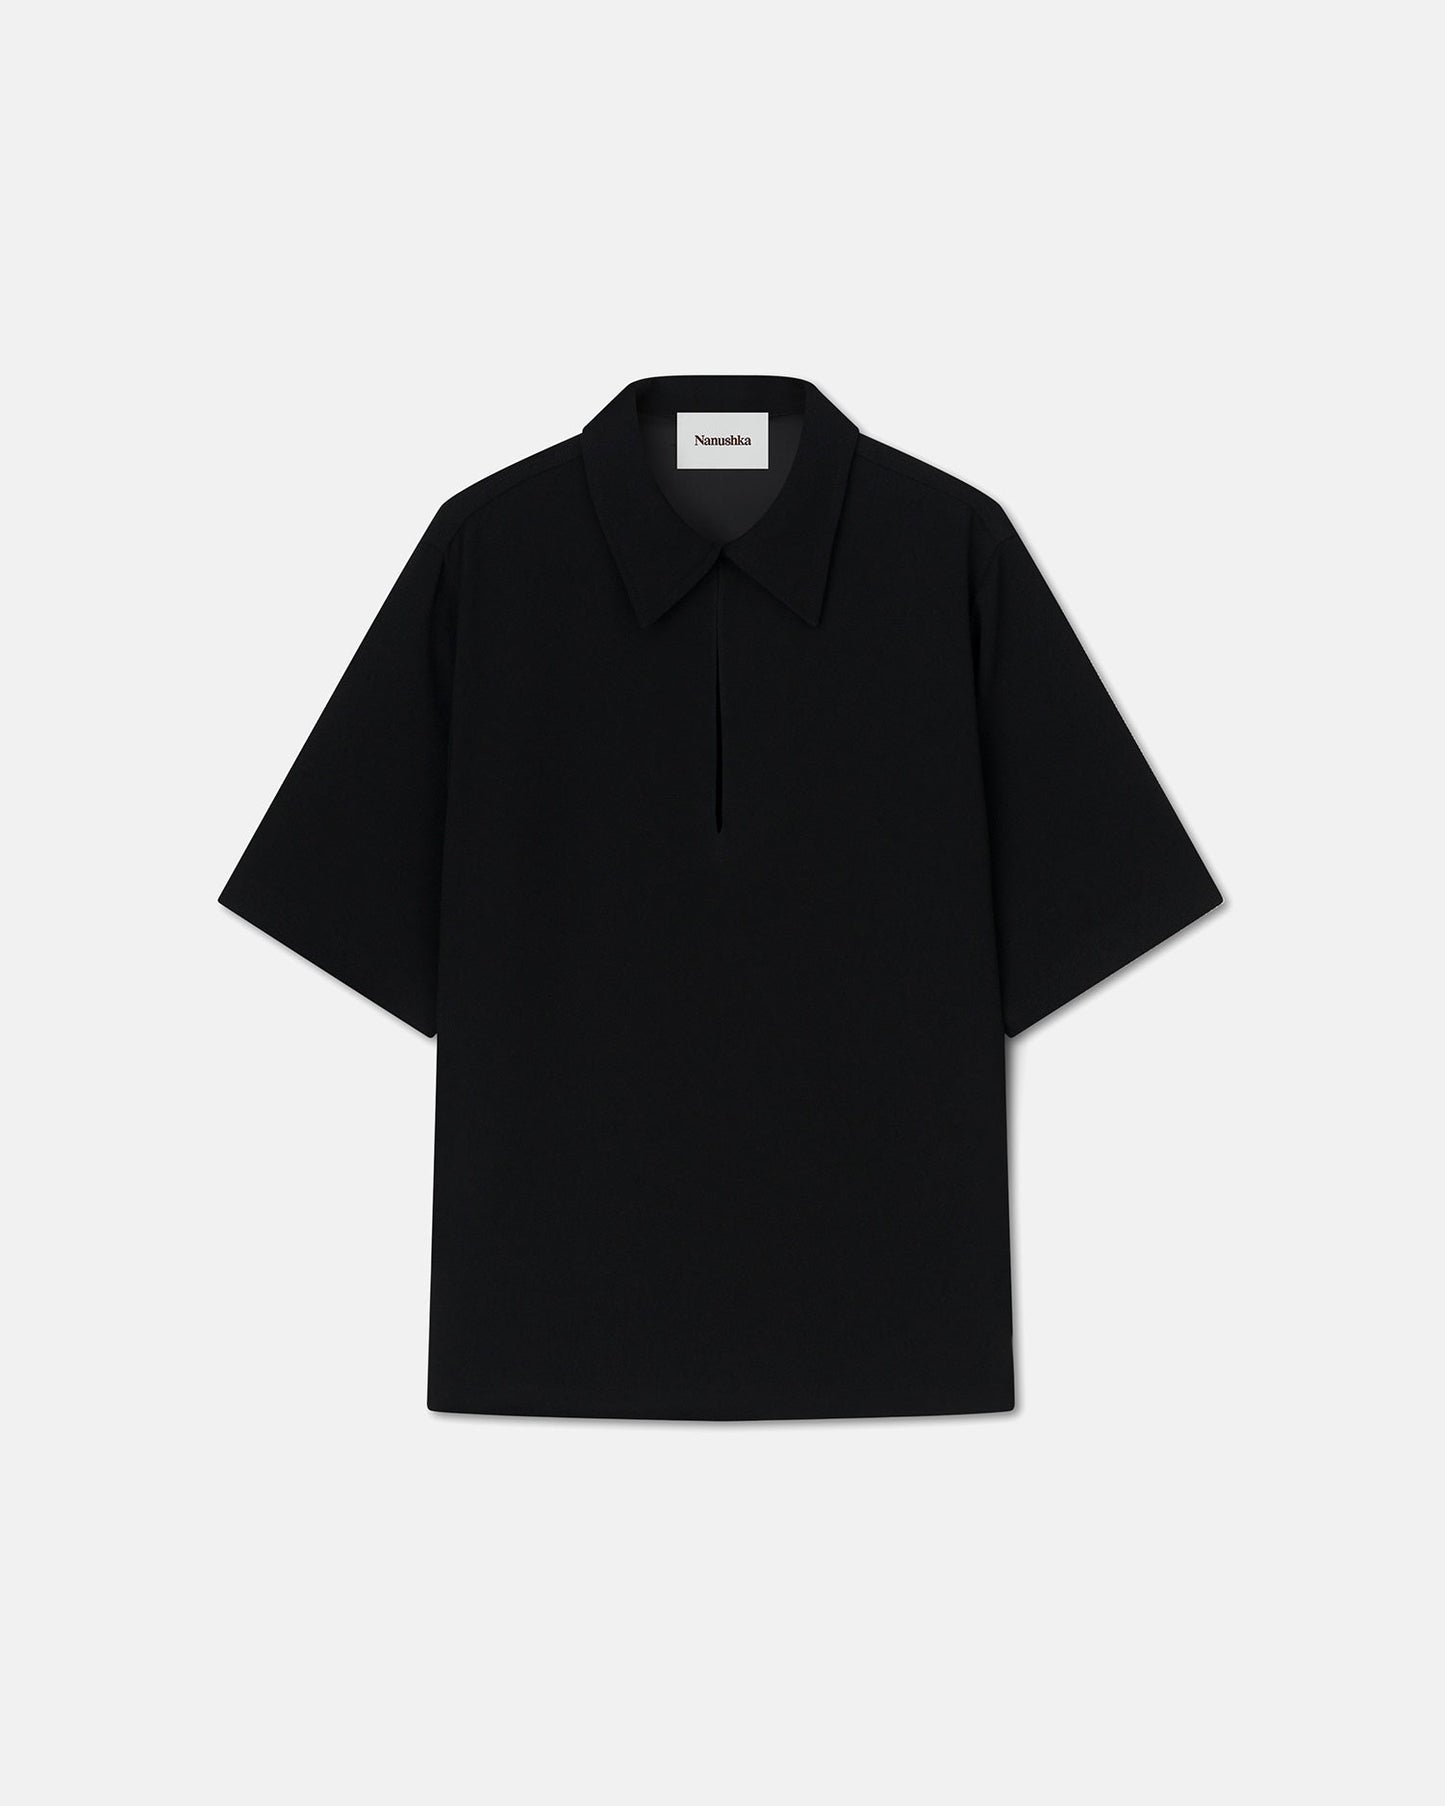 Niklas - Bouclé Crepe Shirt - Black